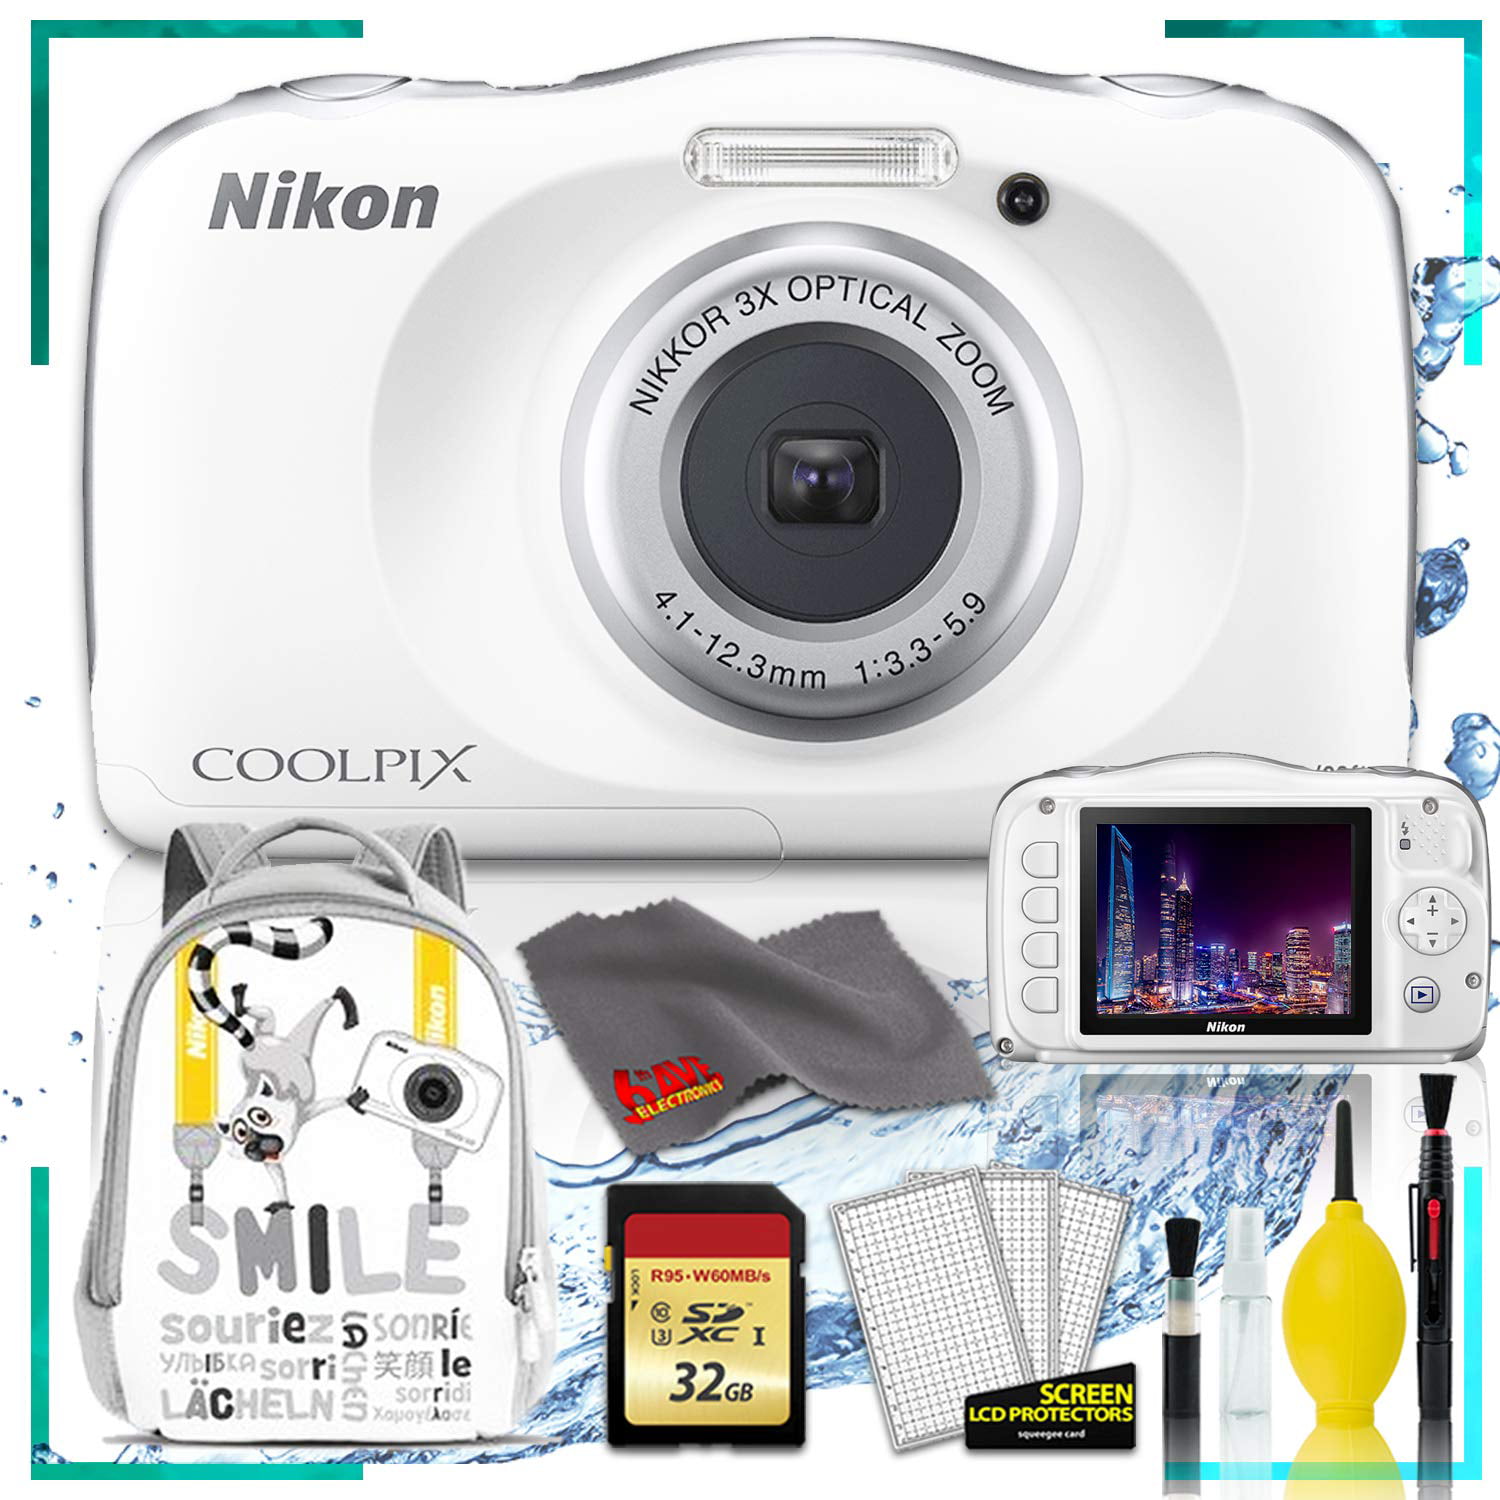 Nikon Coolpix W150 Digital Camera - White (Intl Model) with Camera 